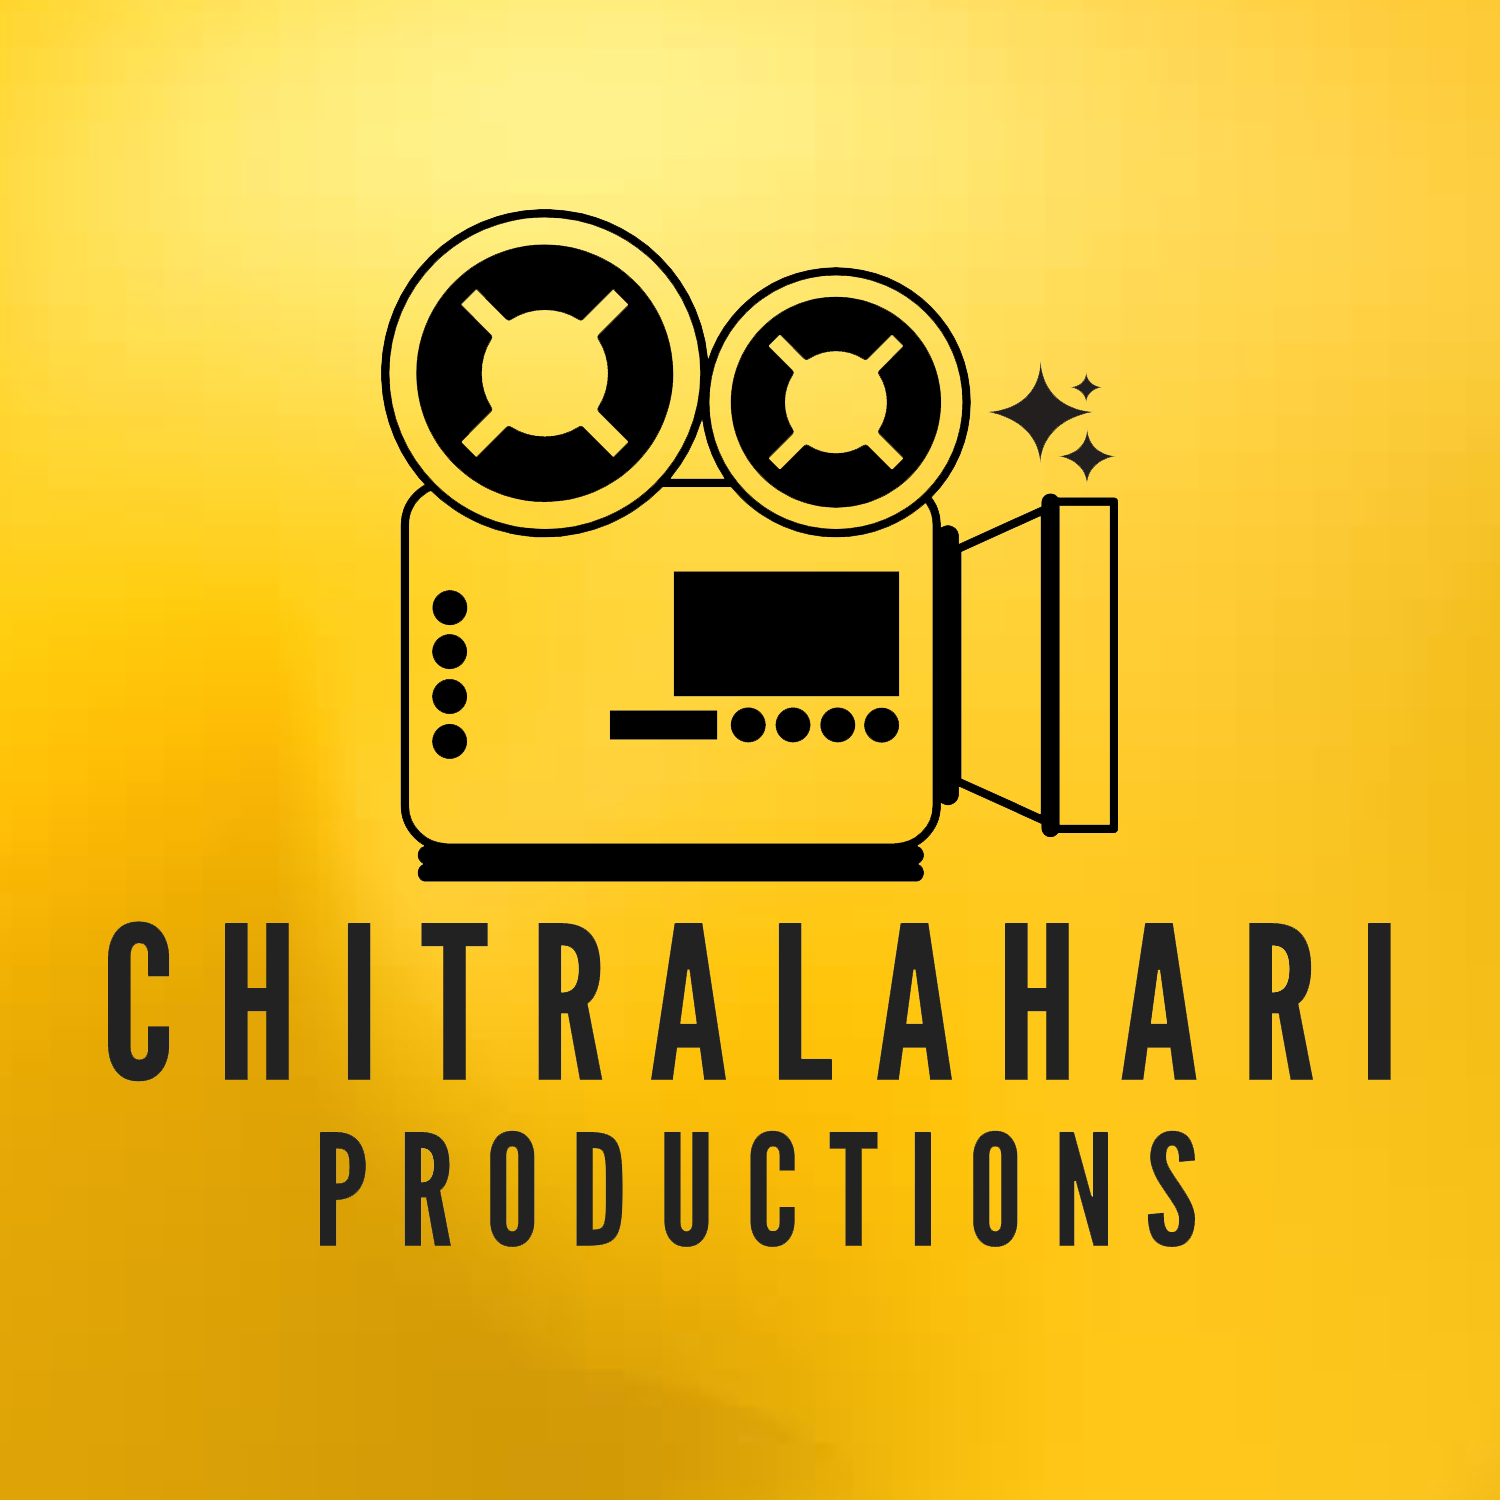 Chitralahari Productions